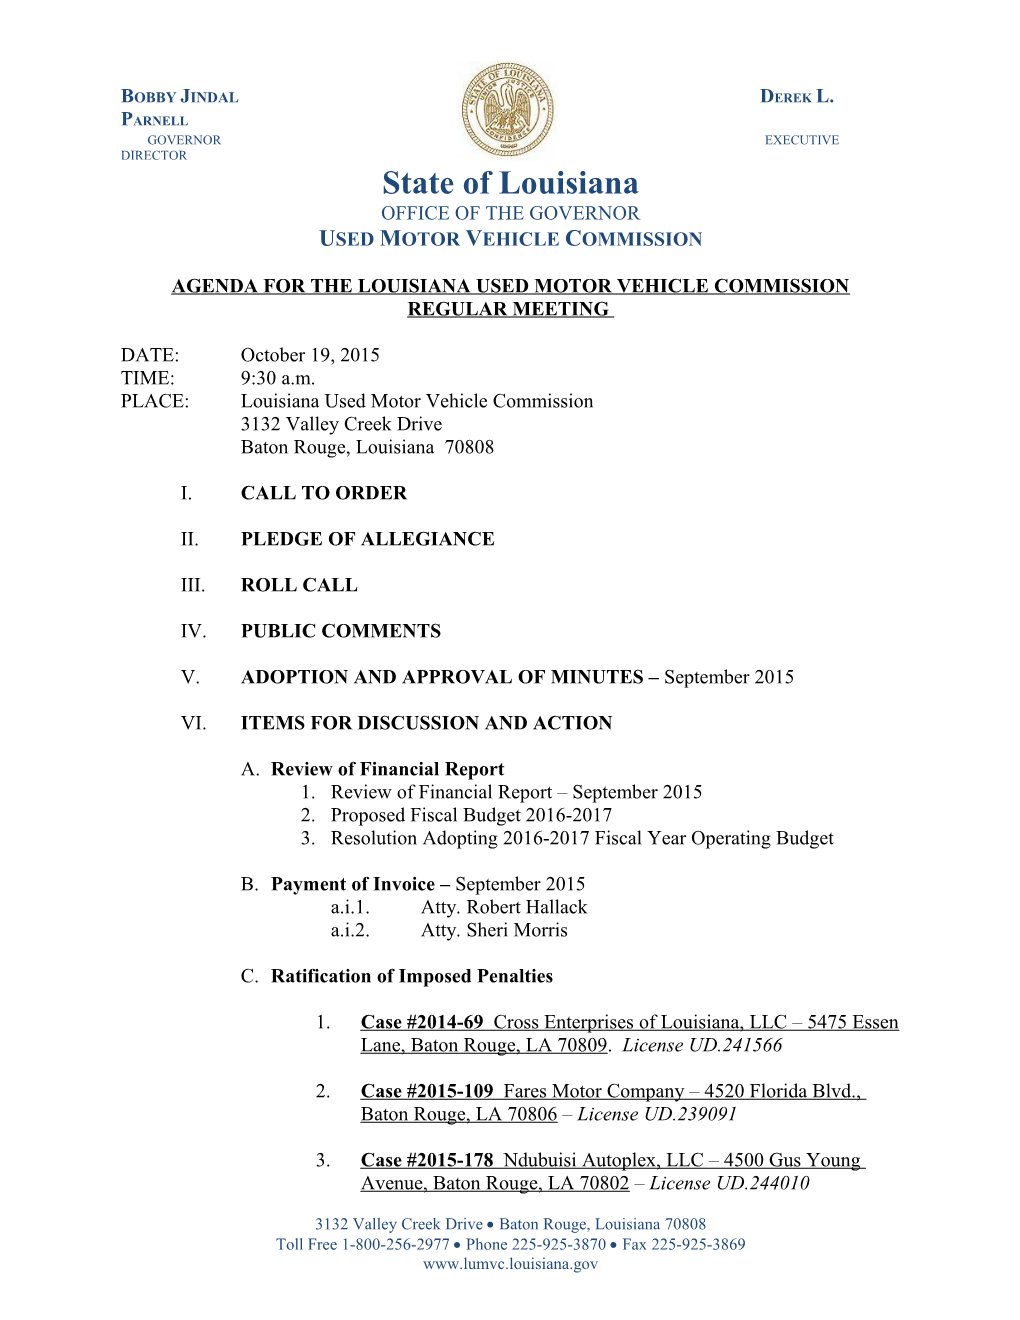 Agenda for the Louisiana Used Motor Vehicle Commission